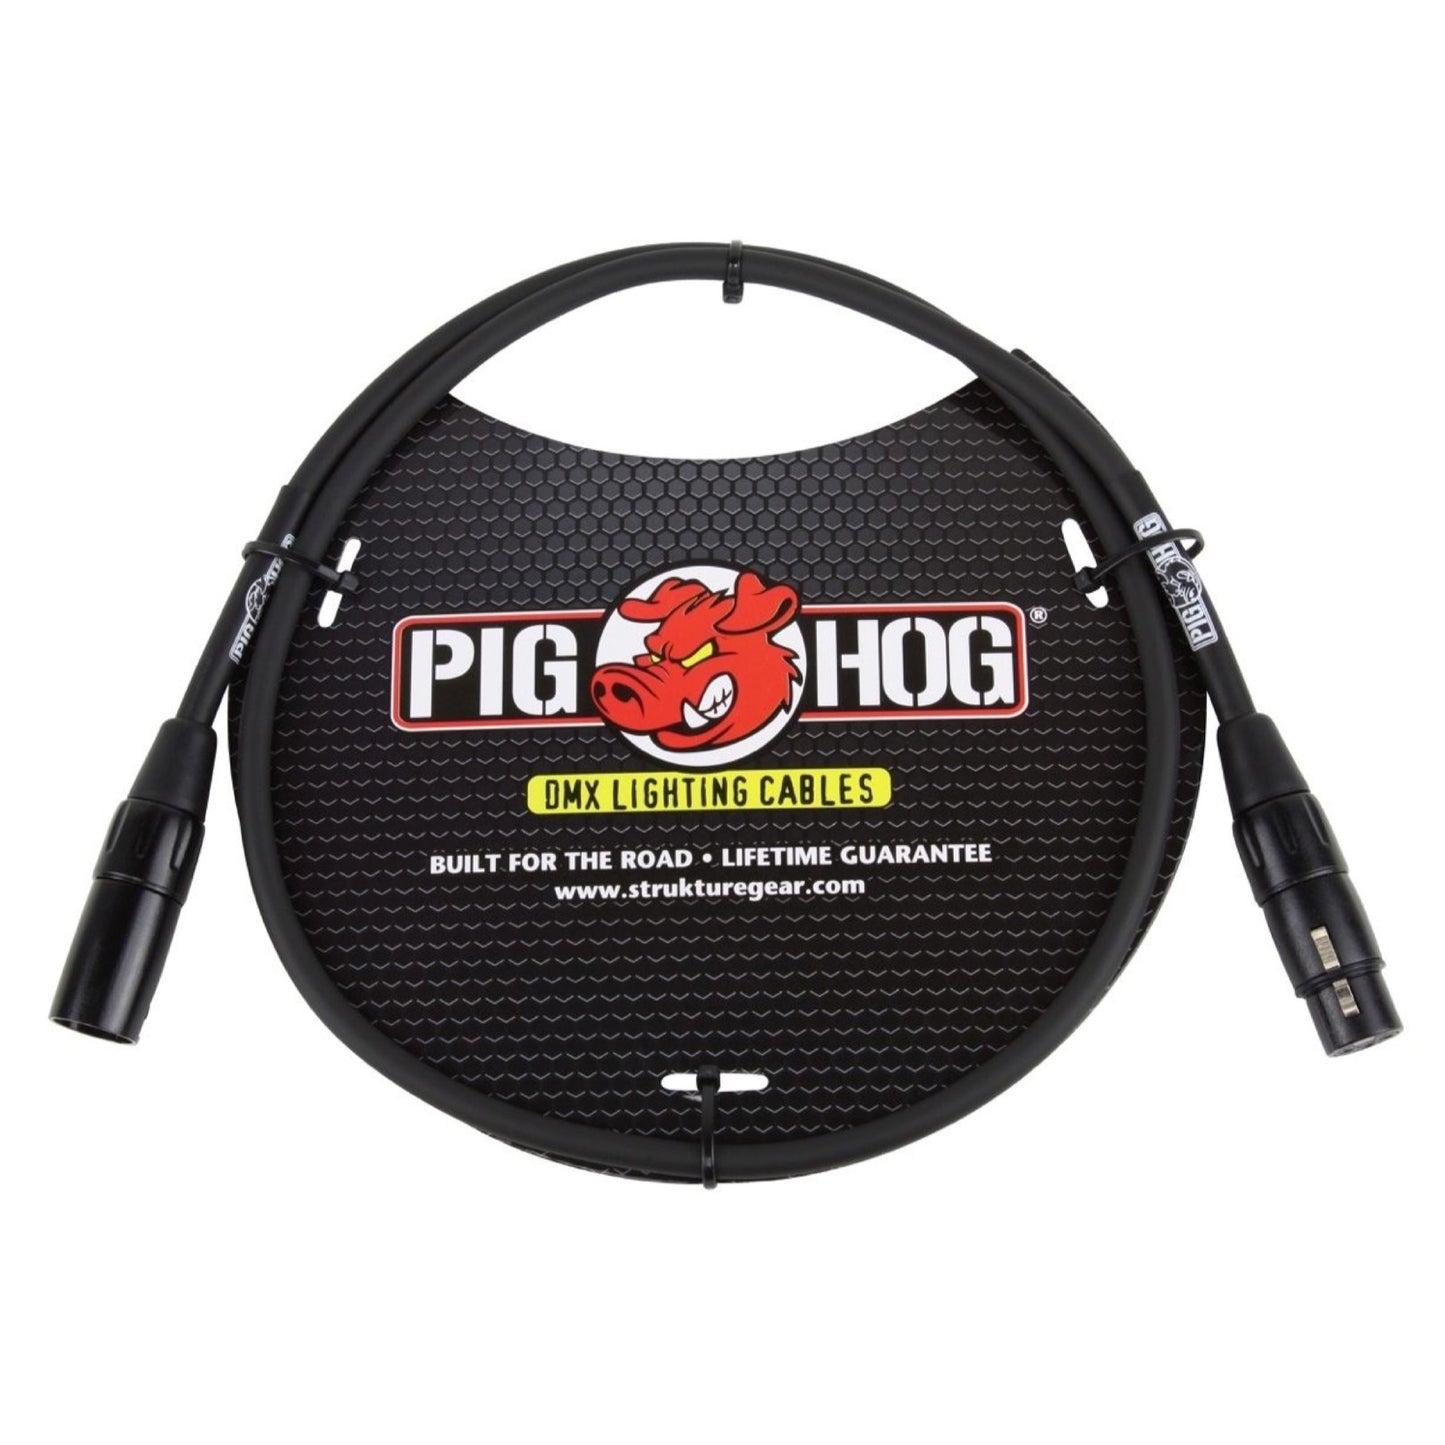 Pig Hog 3-Pin DMX Lighting Cable, 25 Foot